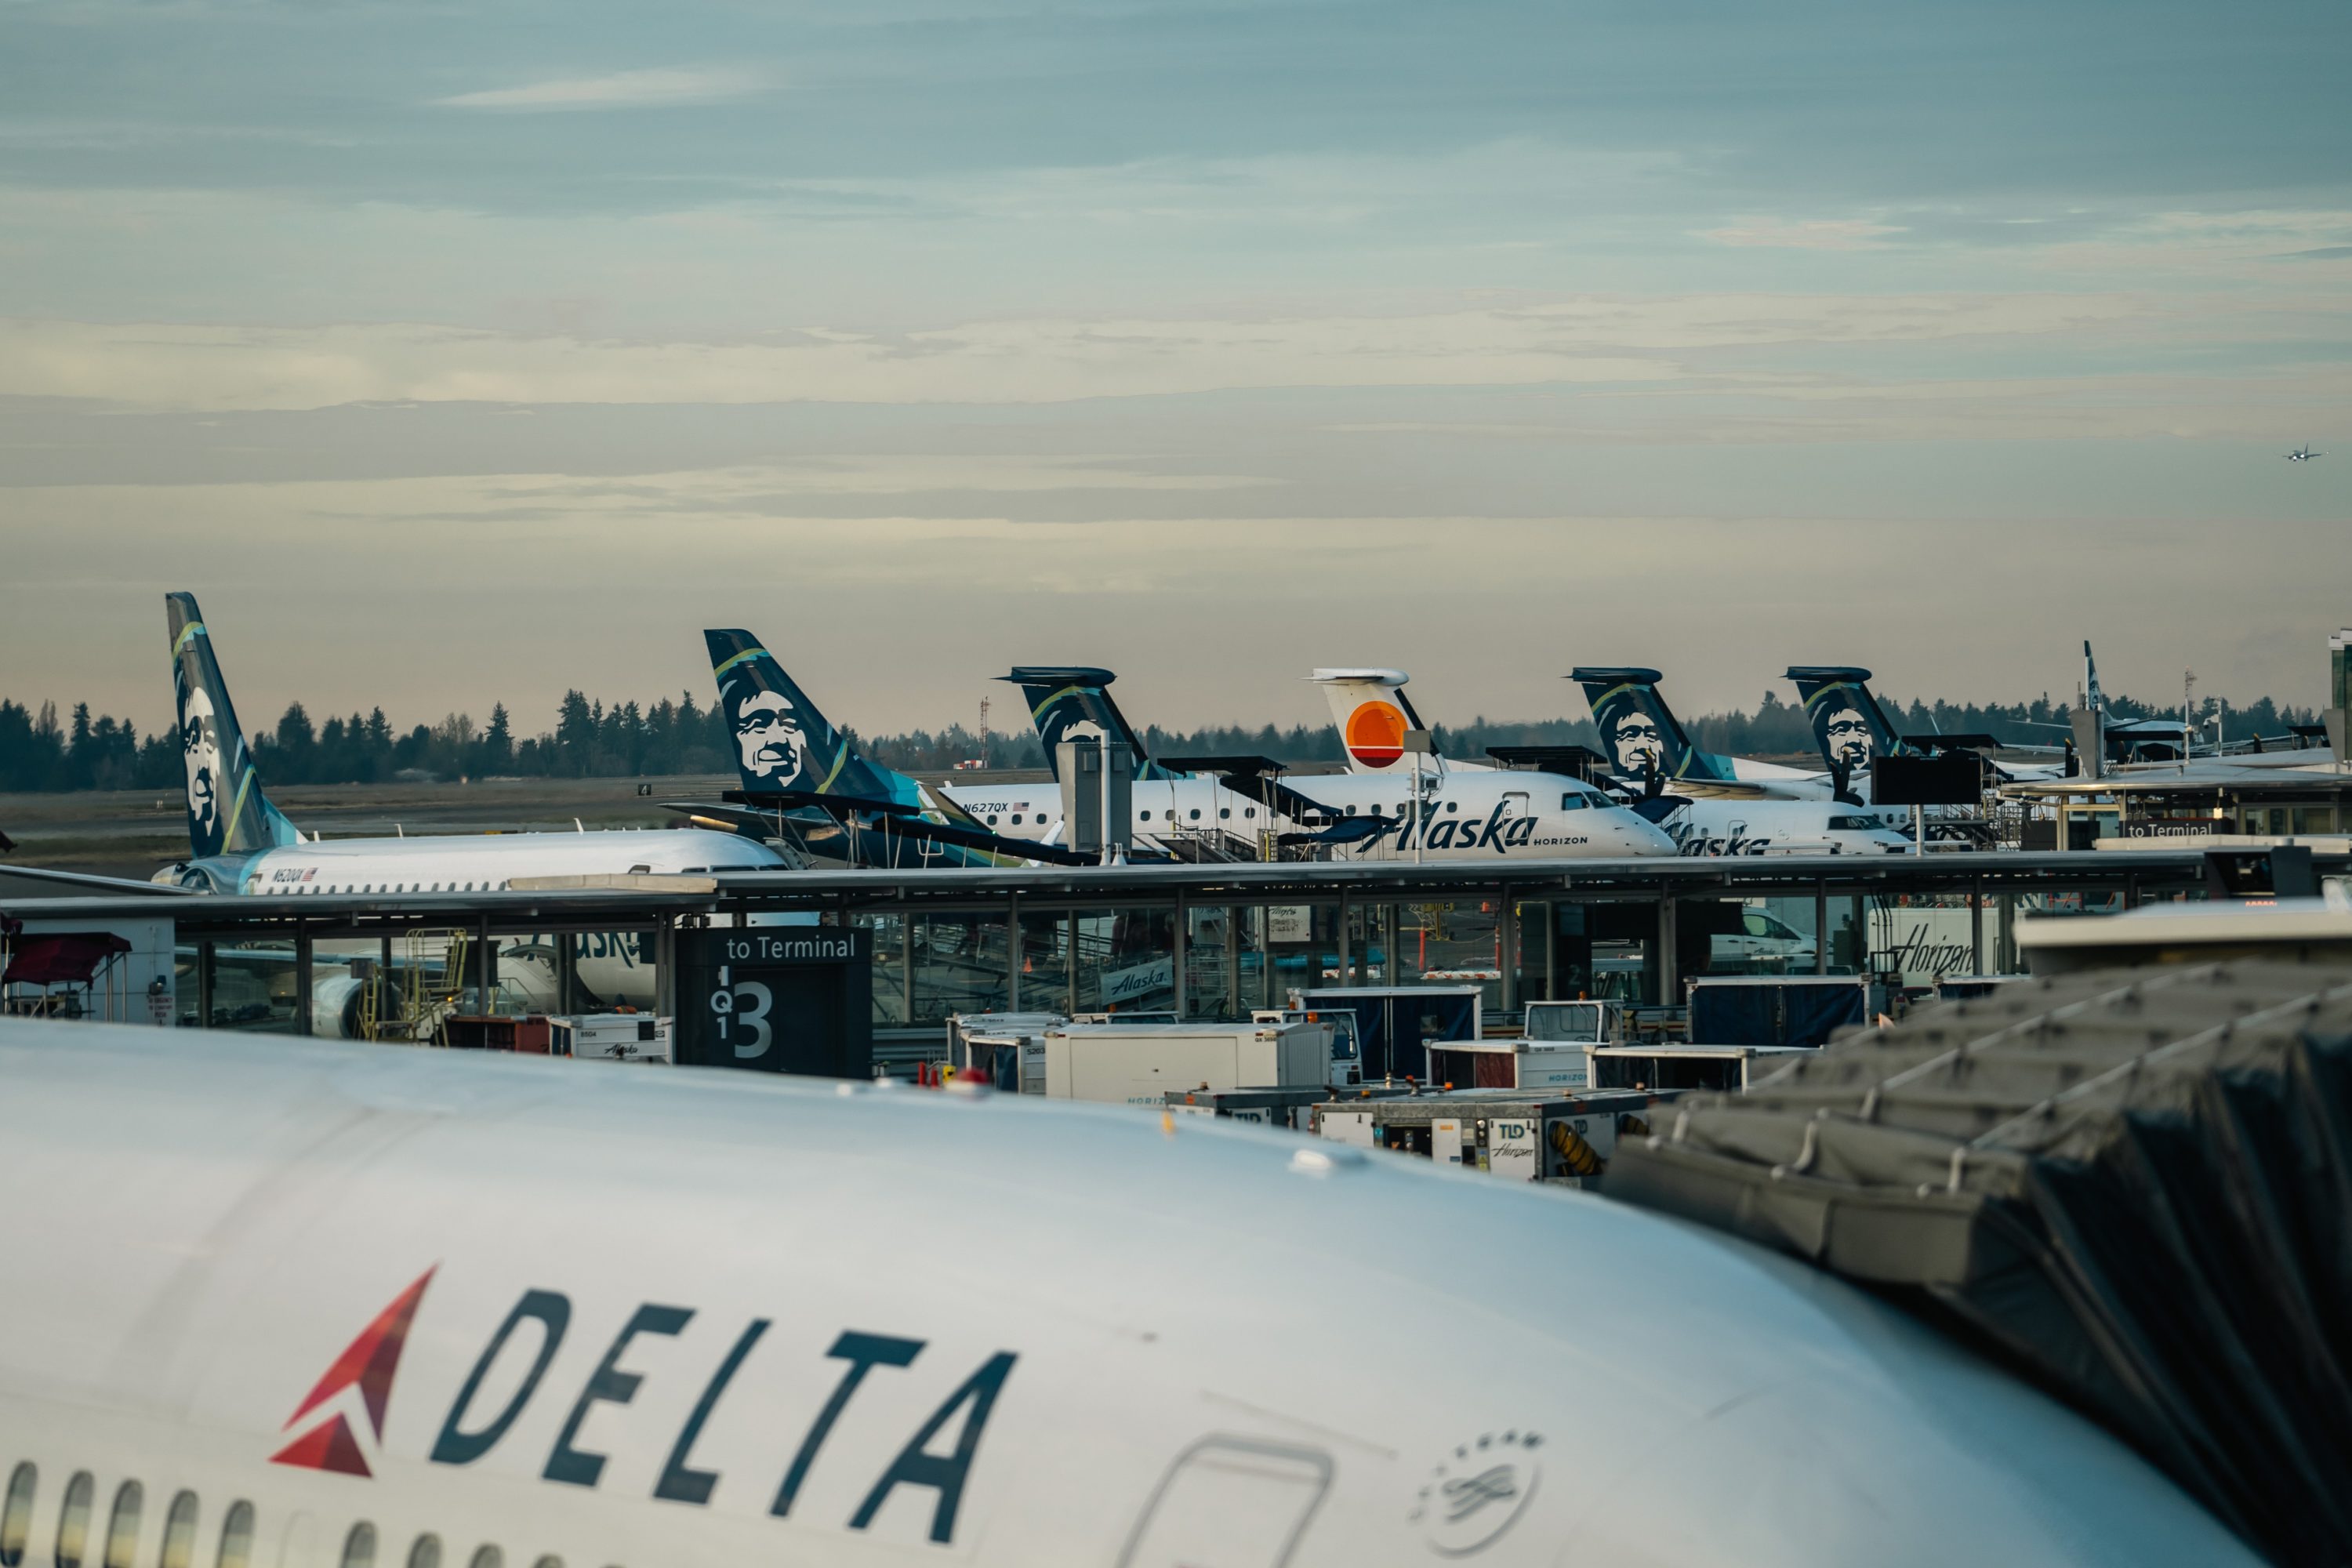 Jets at Seattle-Tacoma International Airport (SEA)